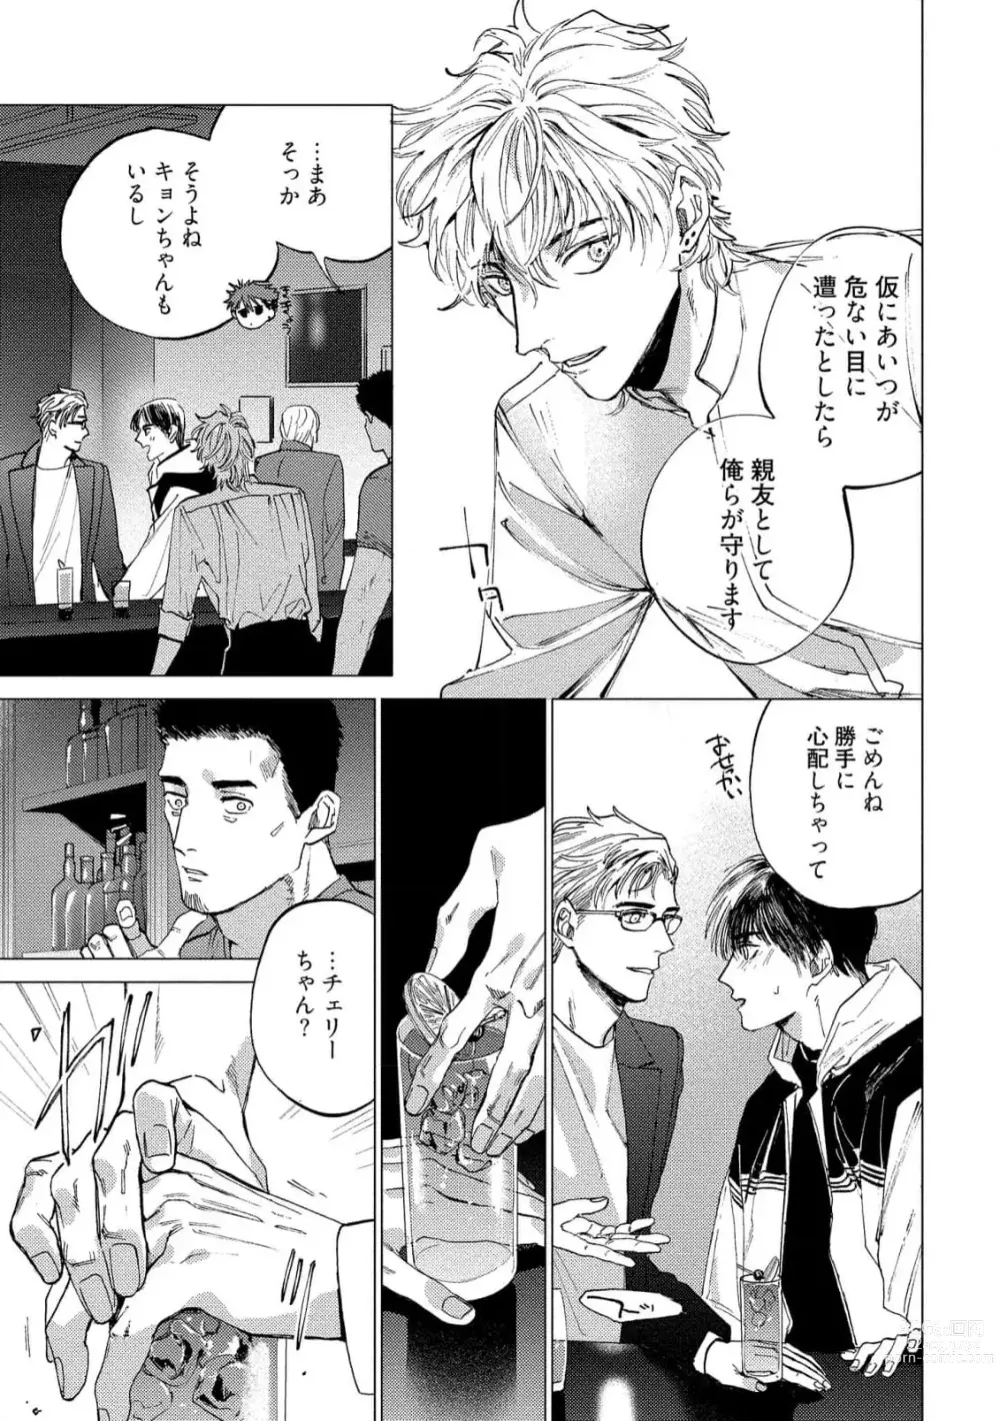 Page 9 of manga Fukushuu ga Tokenai